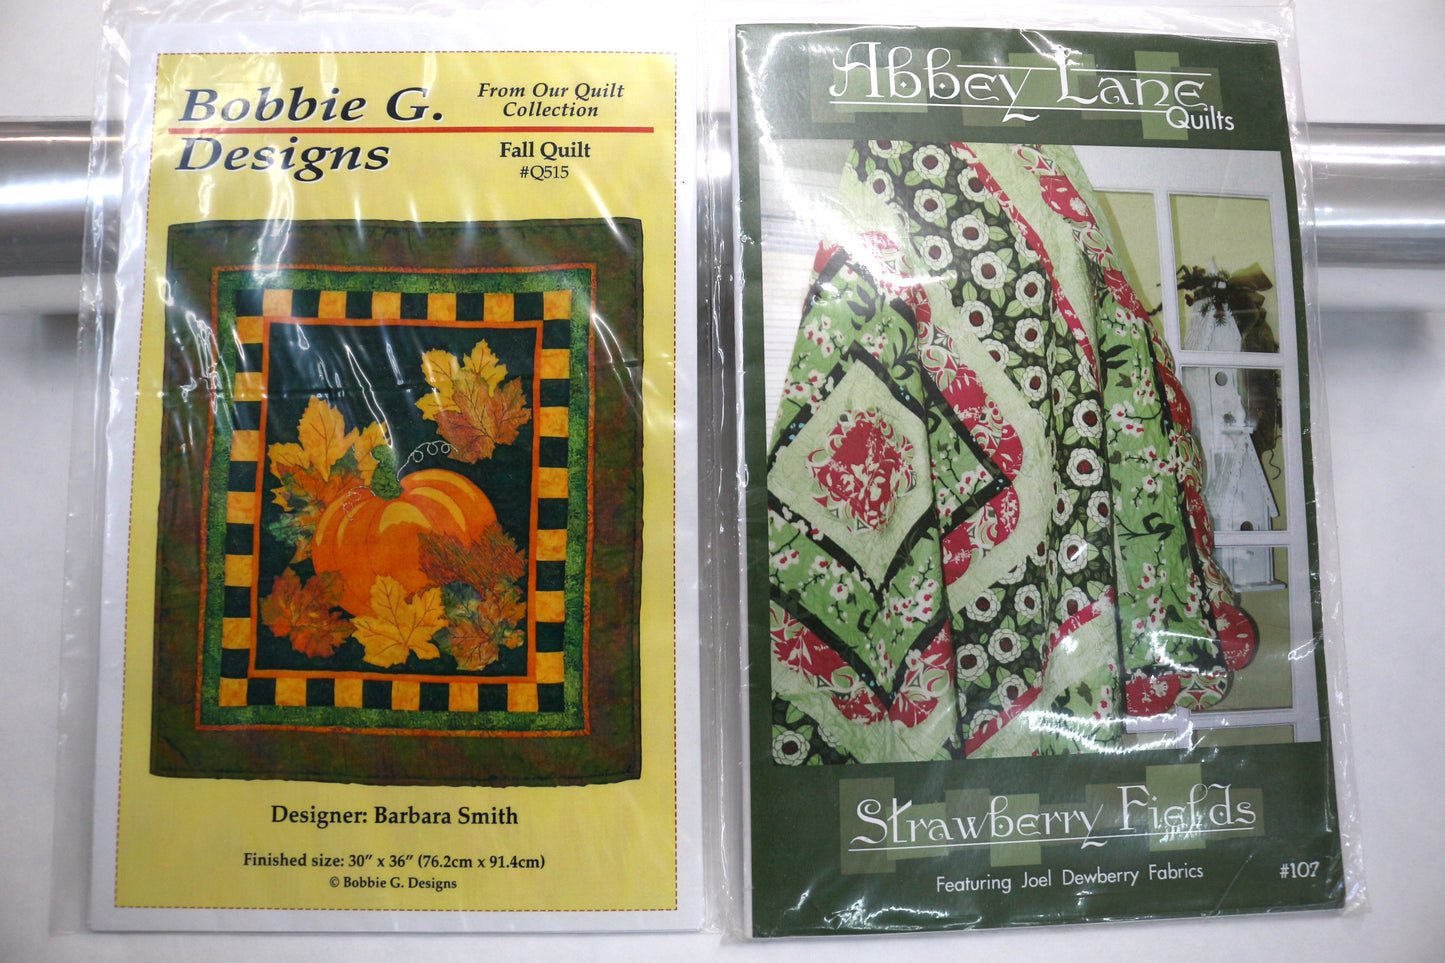 Bobbi G Designs Fall Quilt Pattern or Abbey Lane Strawberry Fields Quilt Pattern